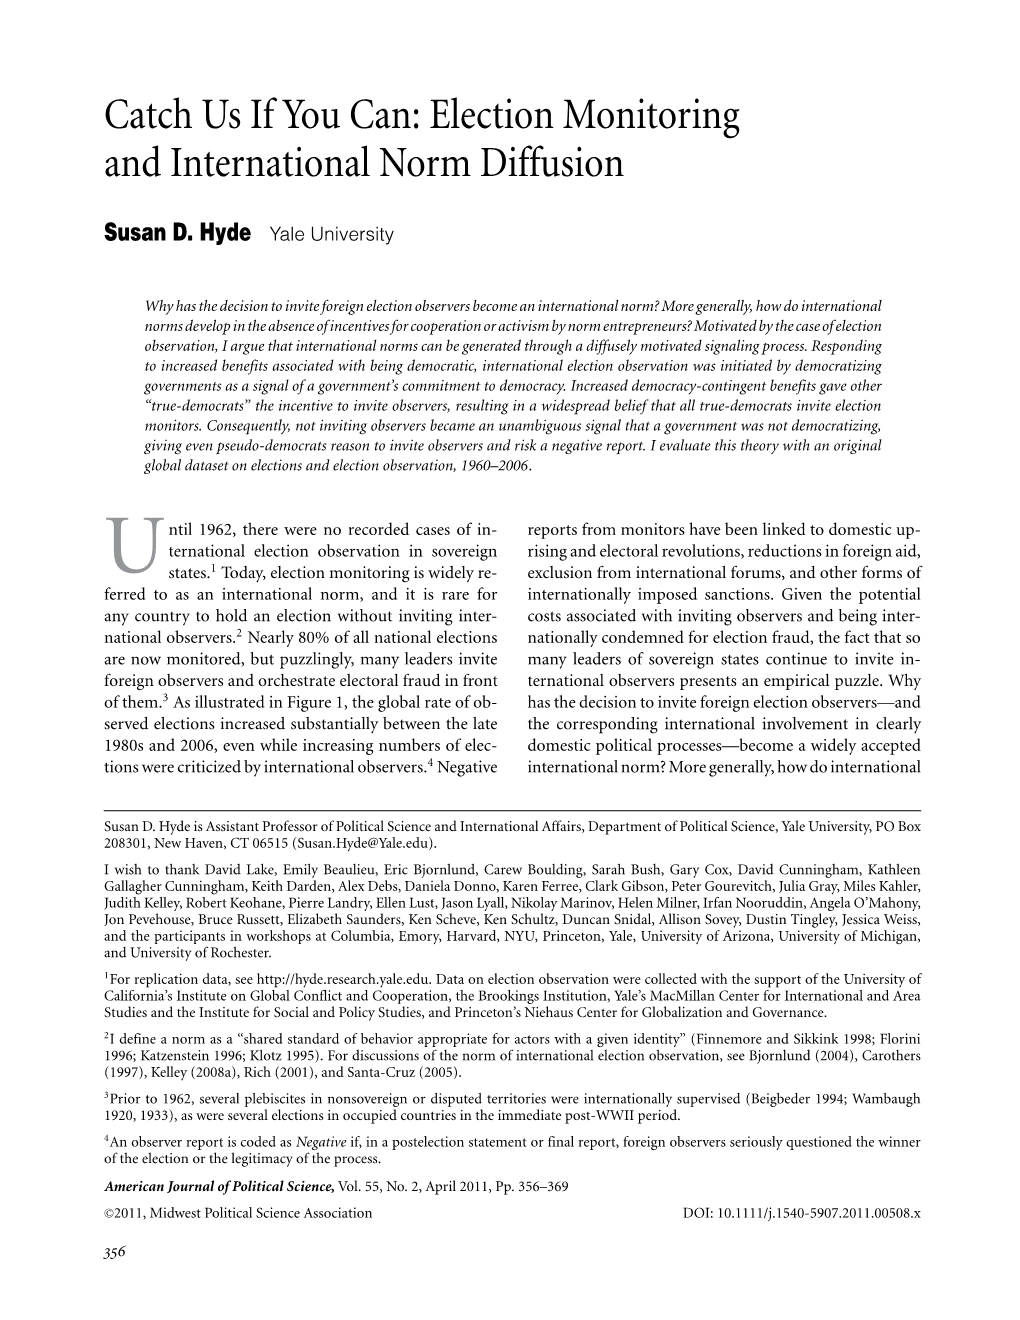 Election Monitoring and International Norm Diffusion